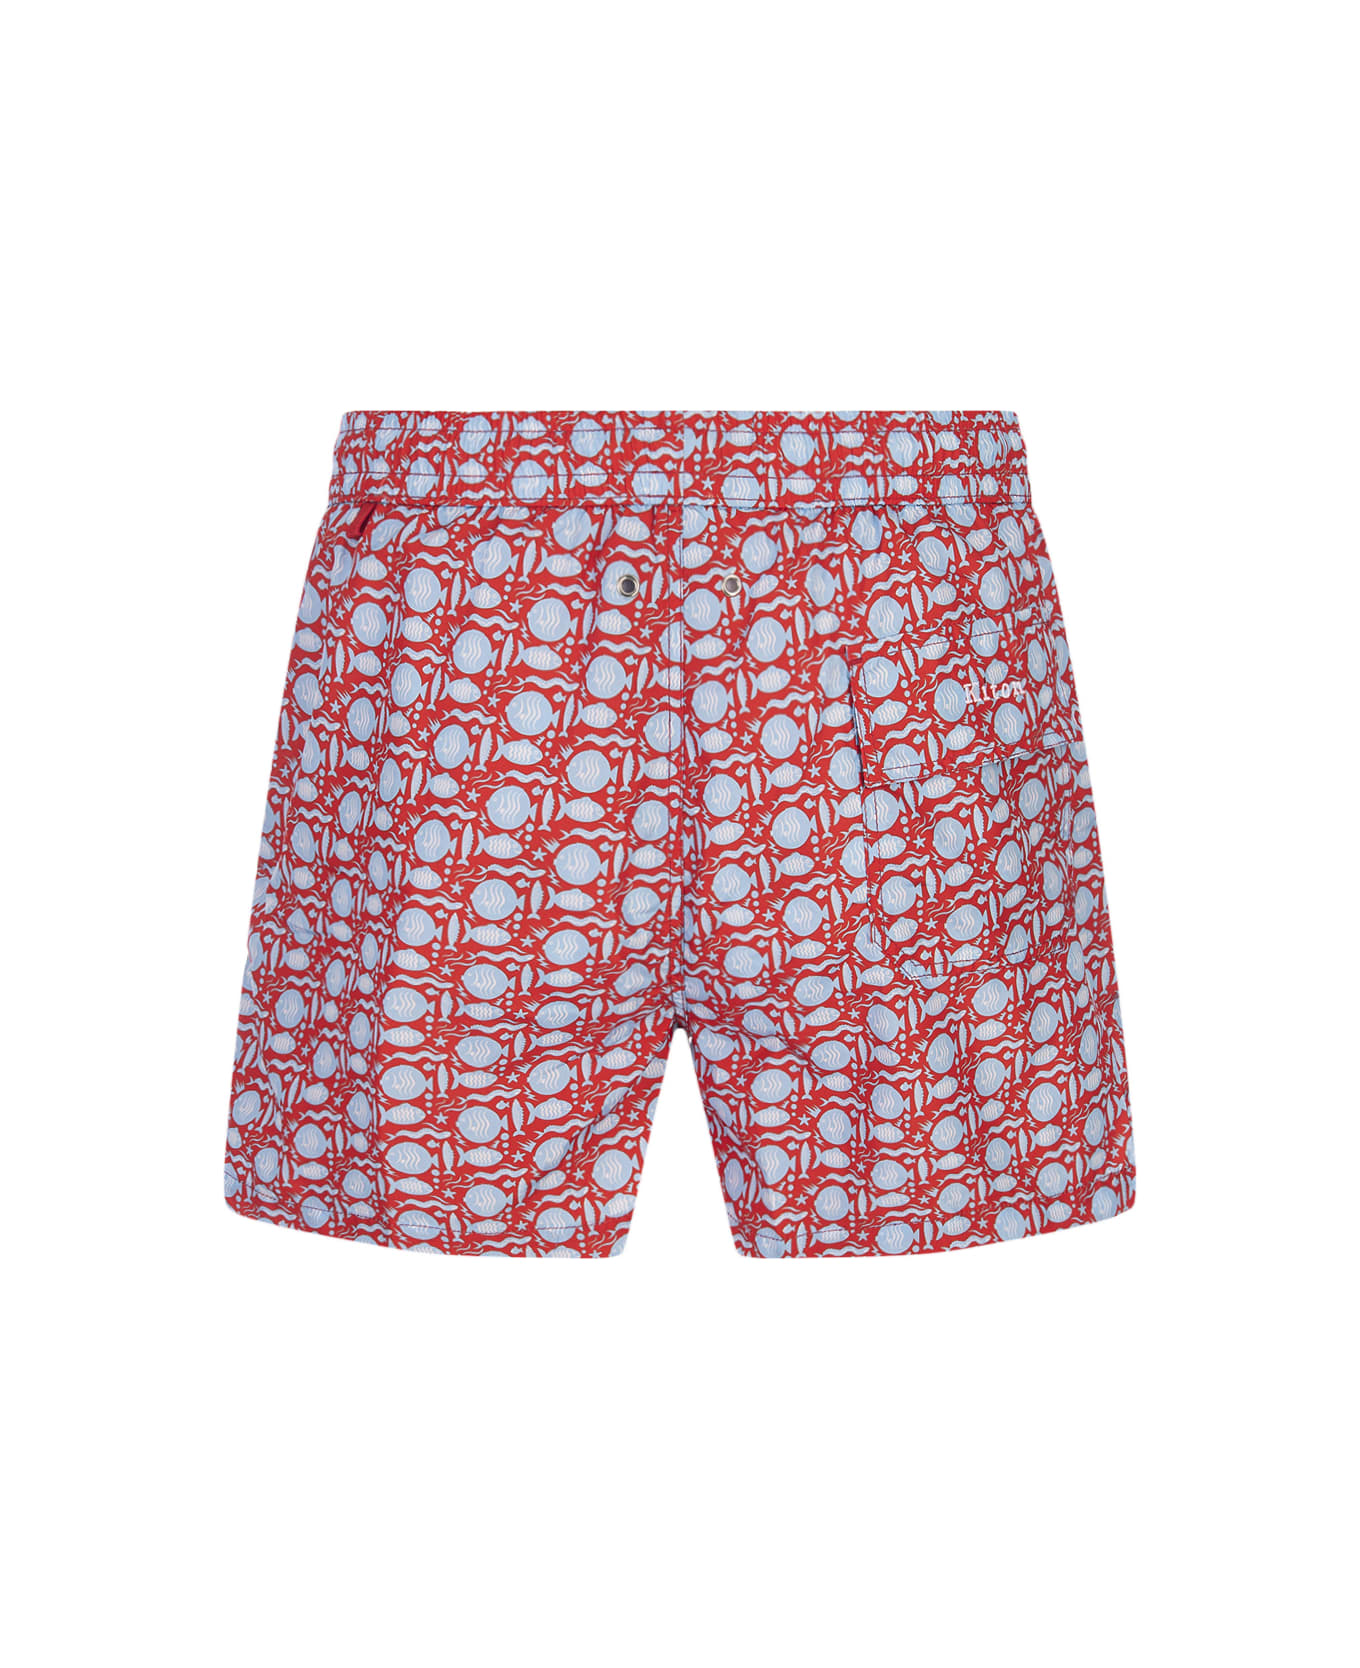 Kiton Red Swim Shorts With Fish Pattern - Red スイムトランクス